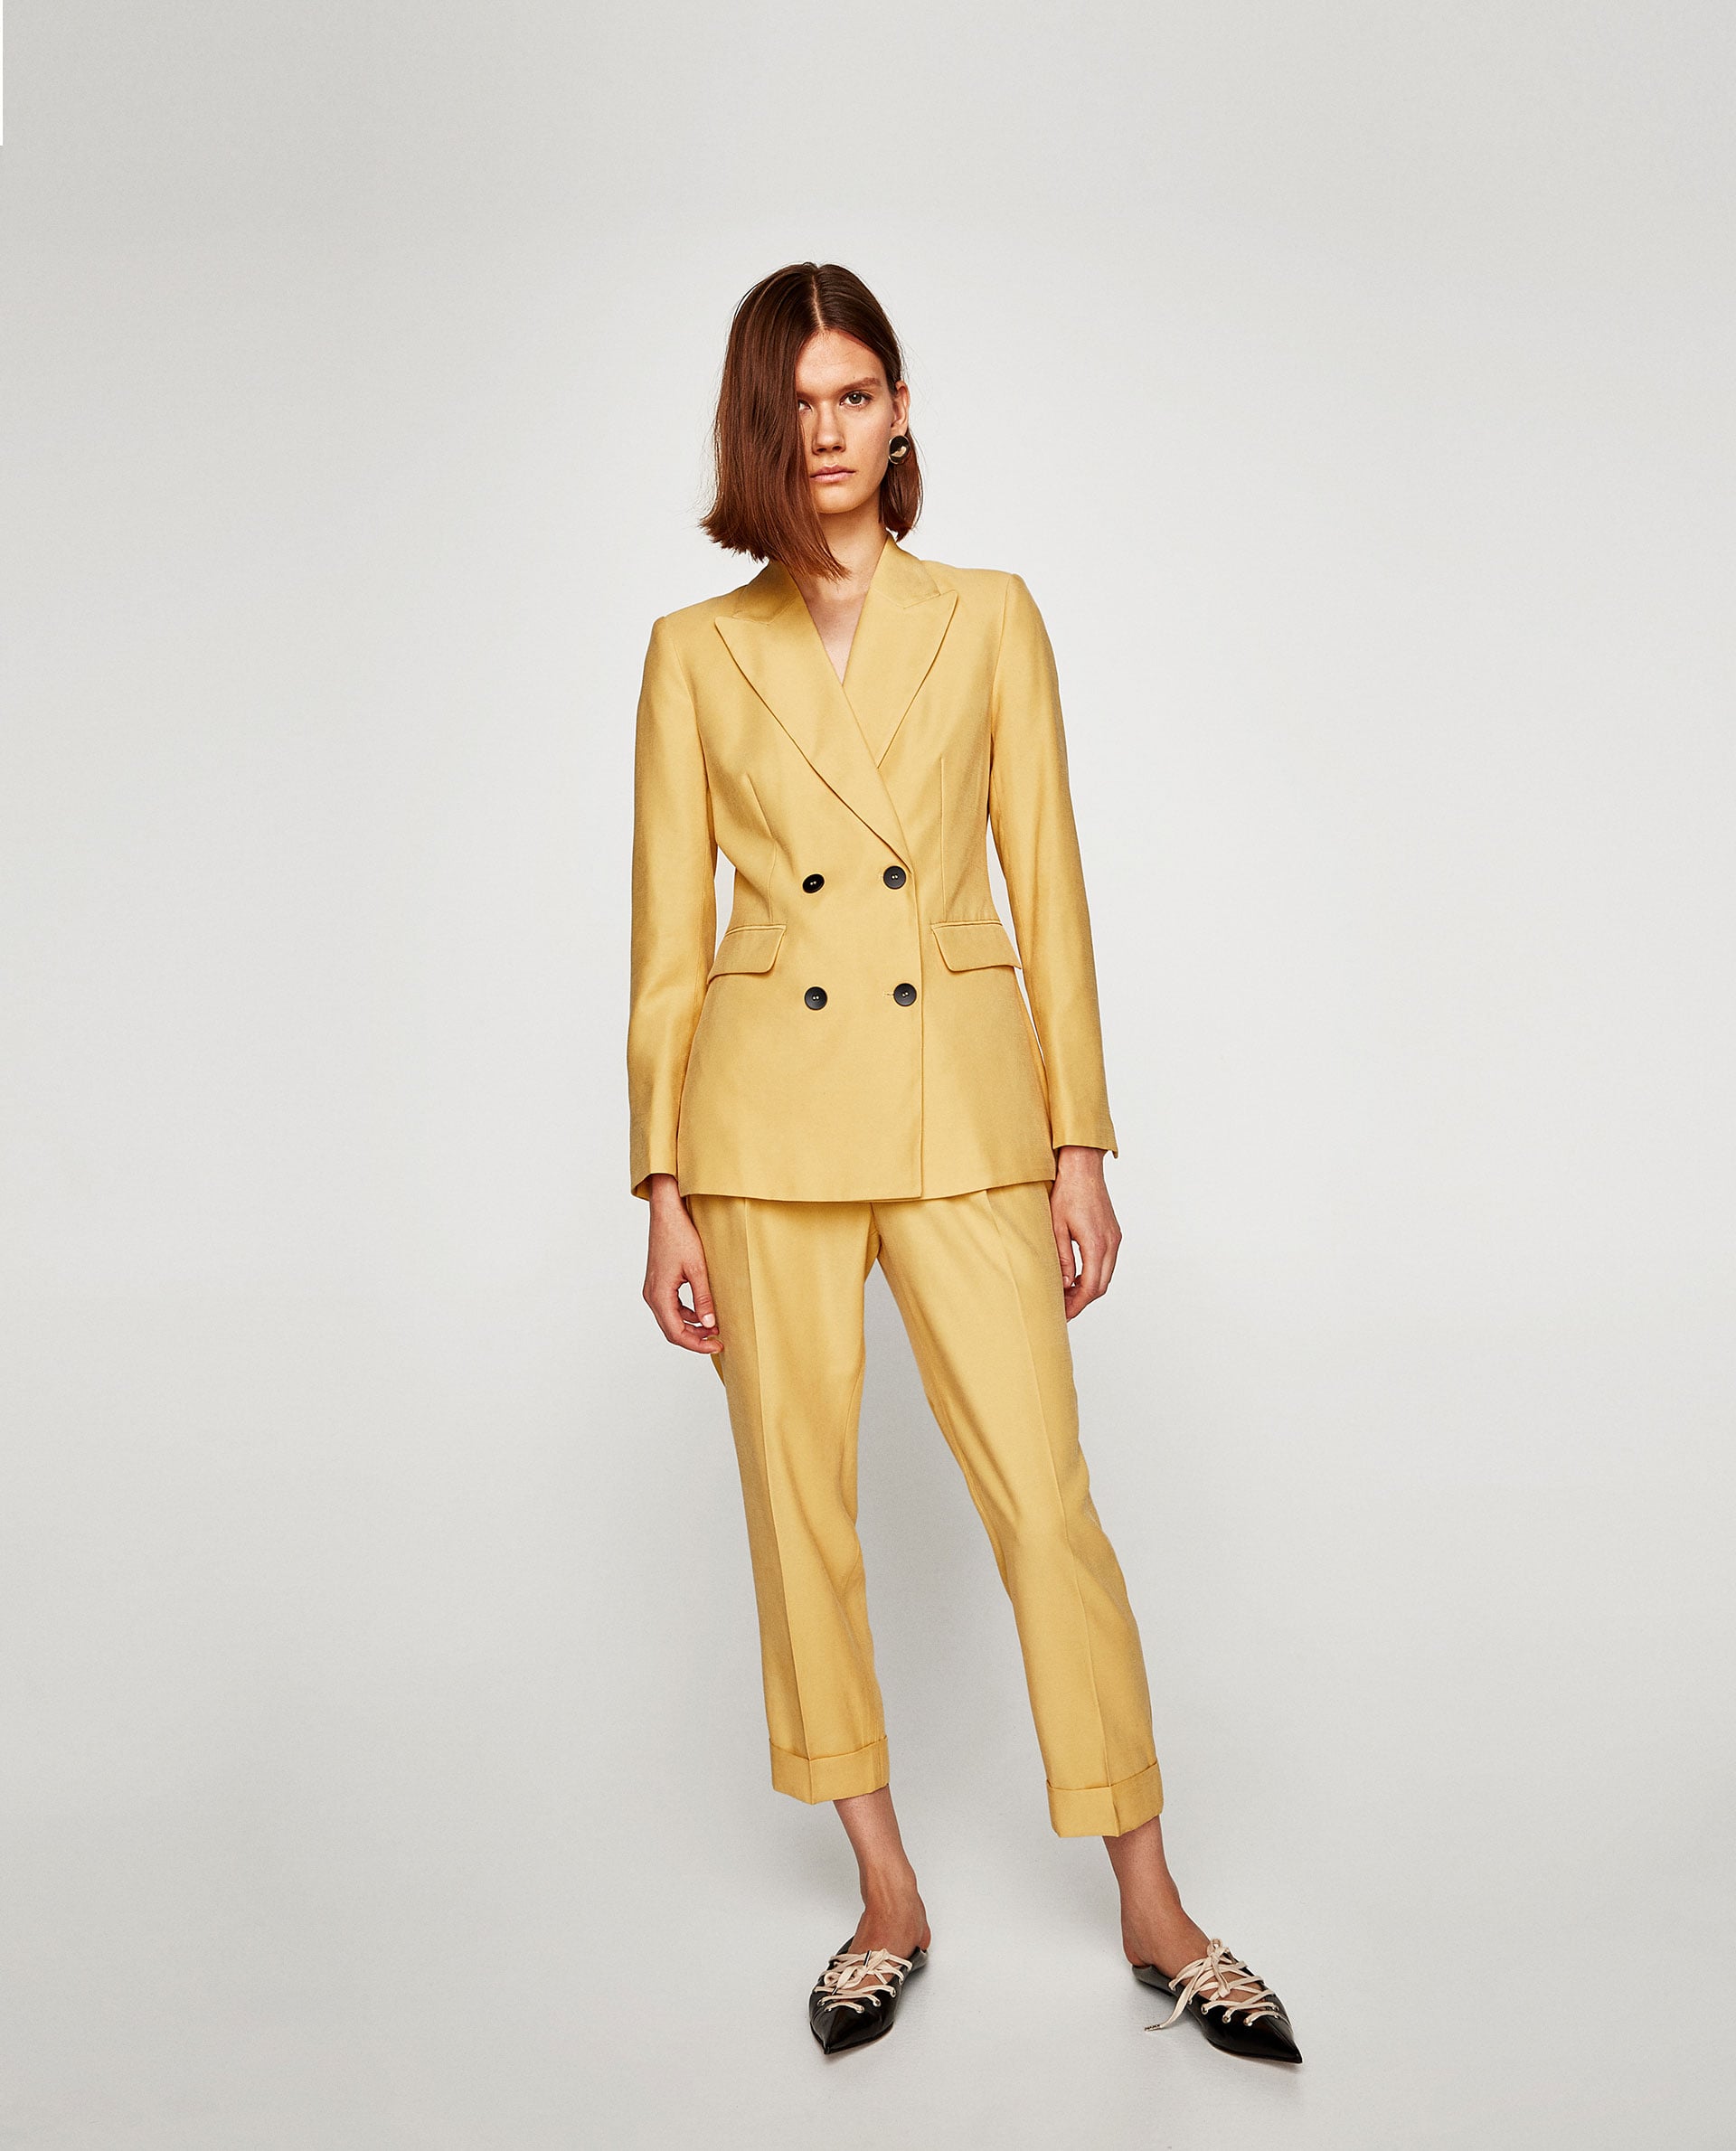 Zara Yellow Pantsuit Set | You'll See 